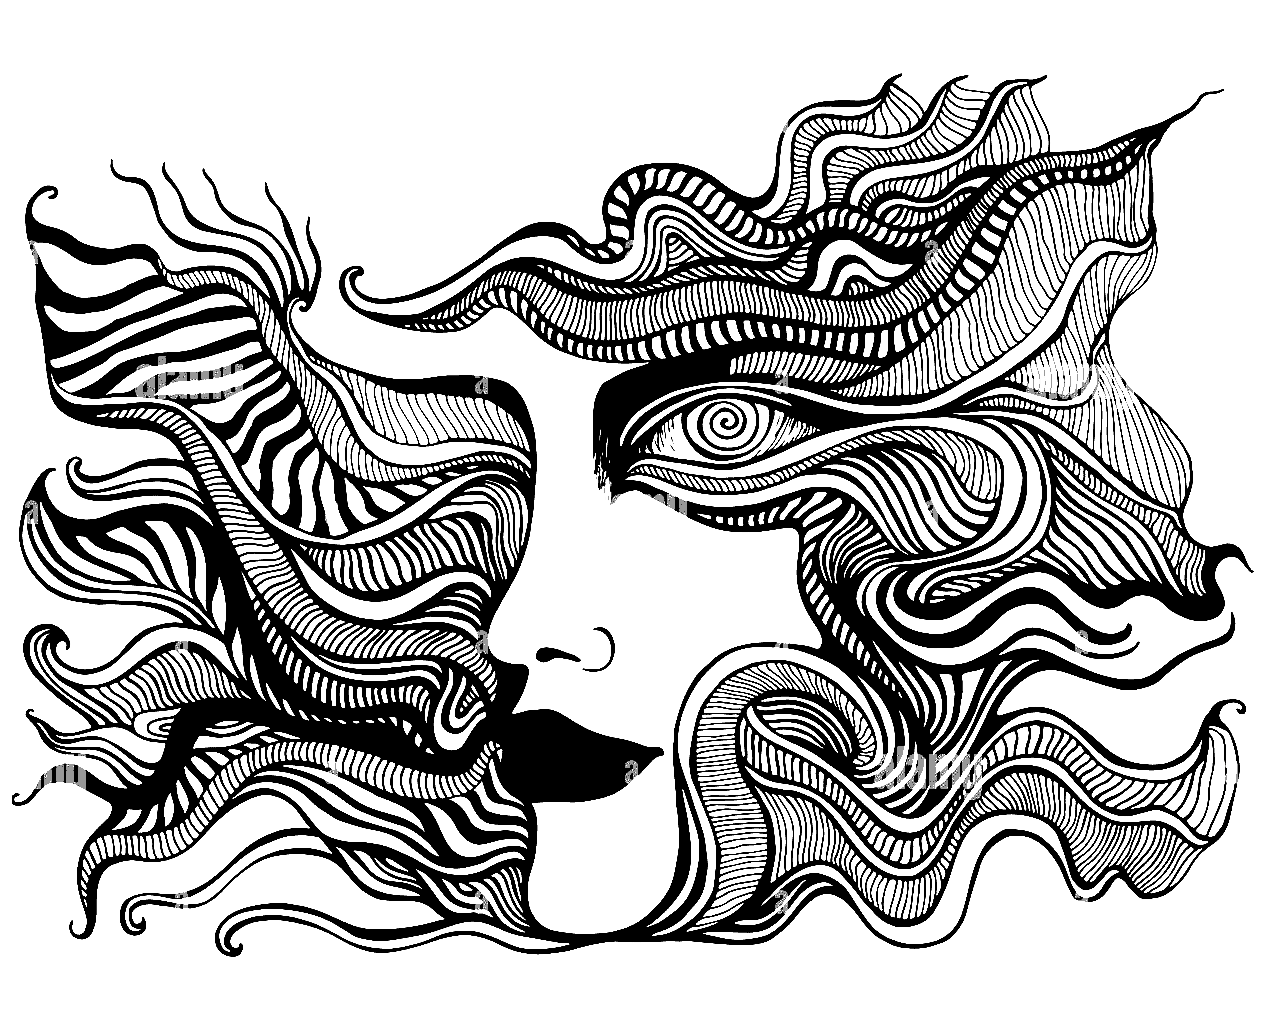 Página para colorear de cara psicodélica con ojo en espiral